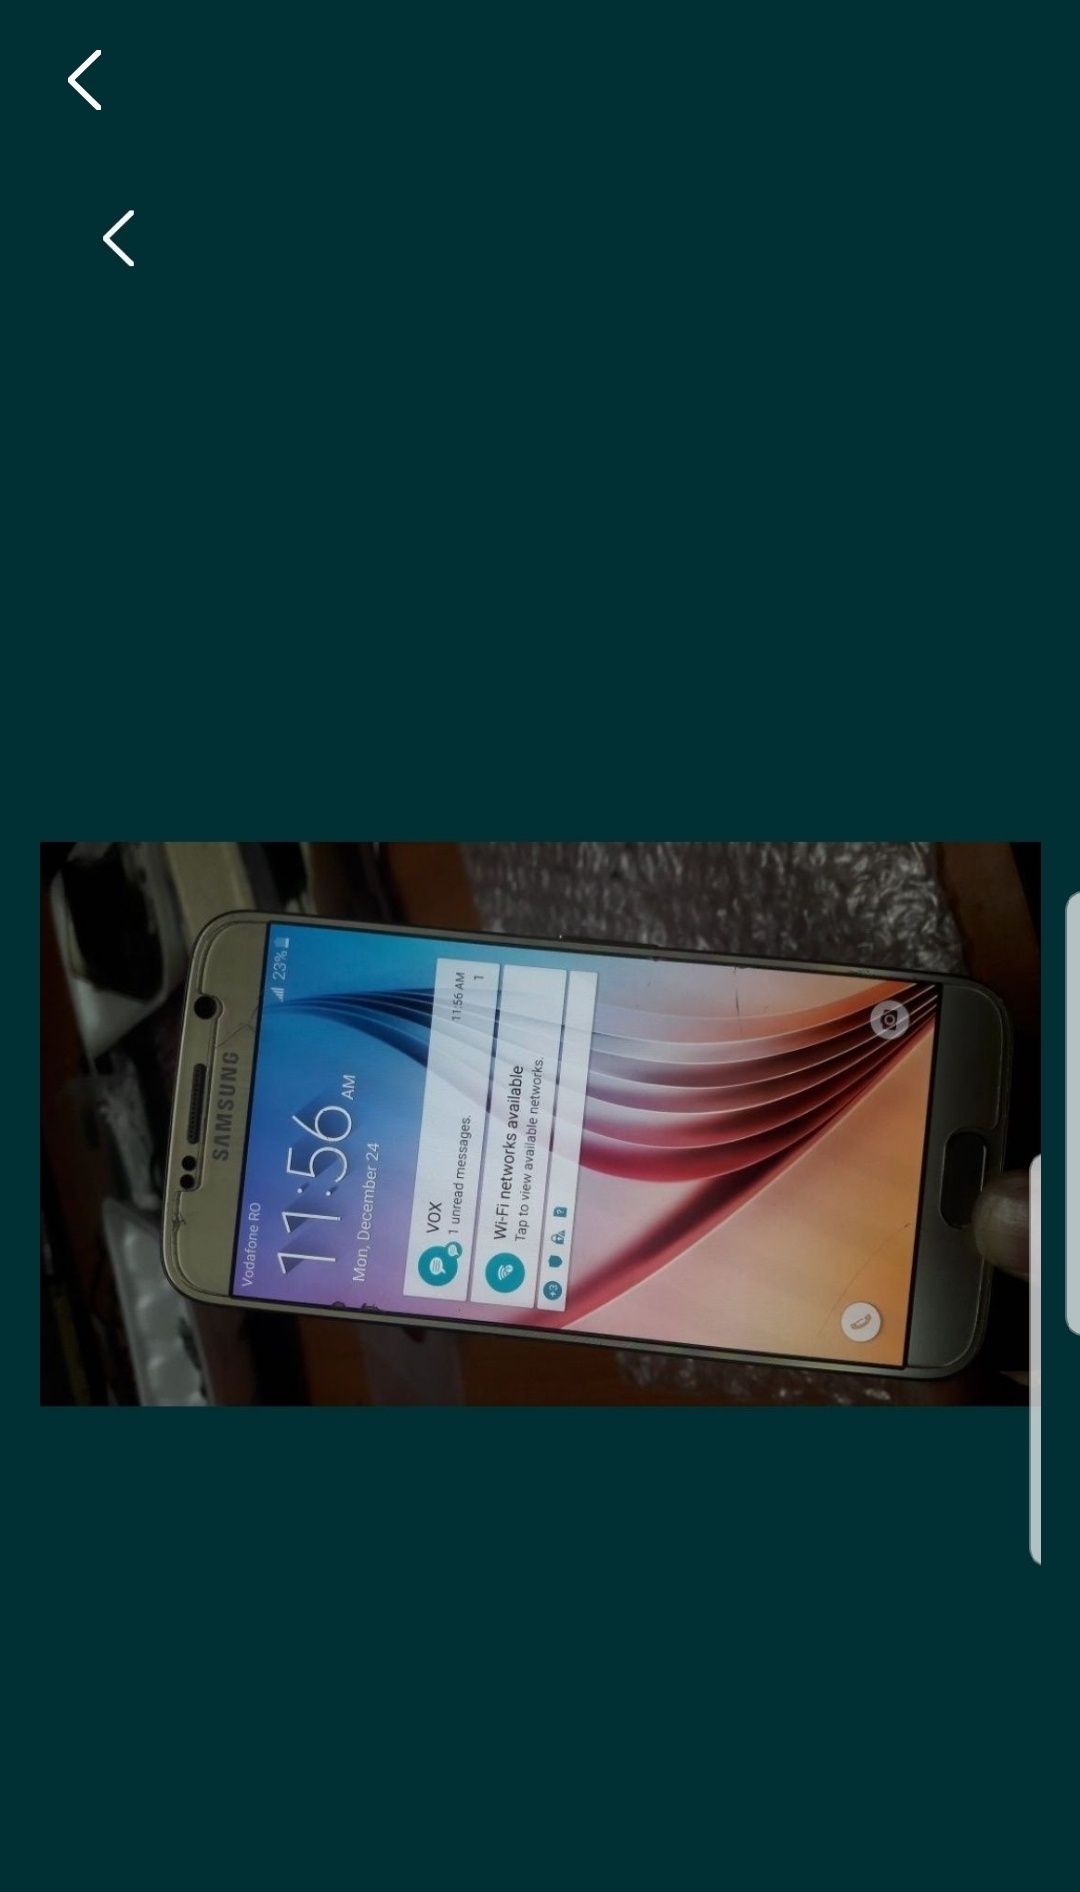 Placa S6 Fara conturi sau parole. Liber de retea.Placa Samsung S6 libe